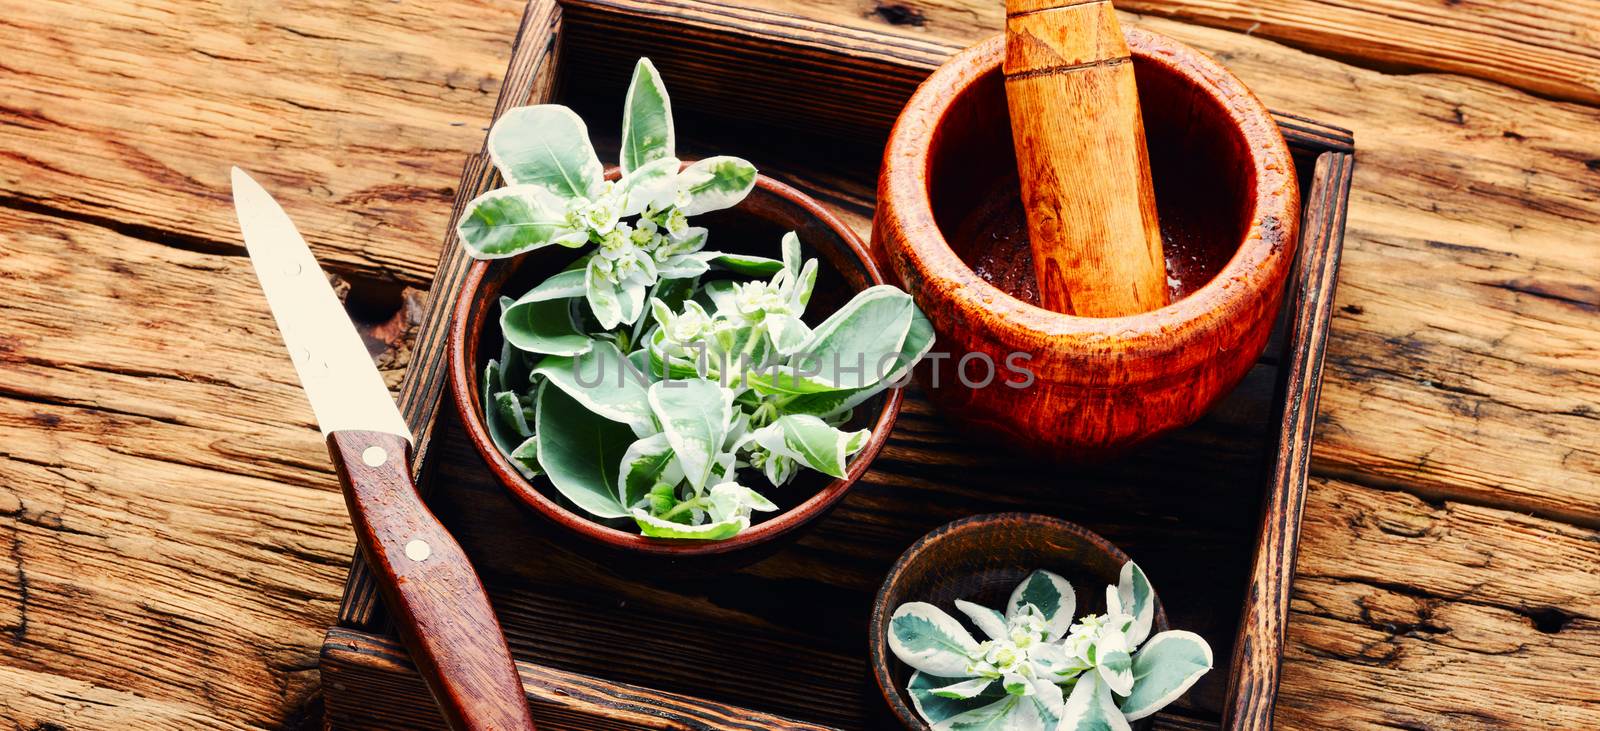 Euphorbia - an ancient means of folk medicine by LMykola